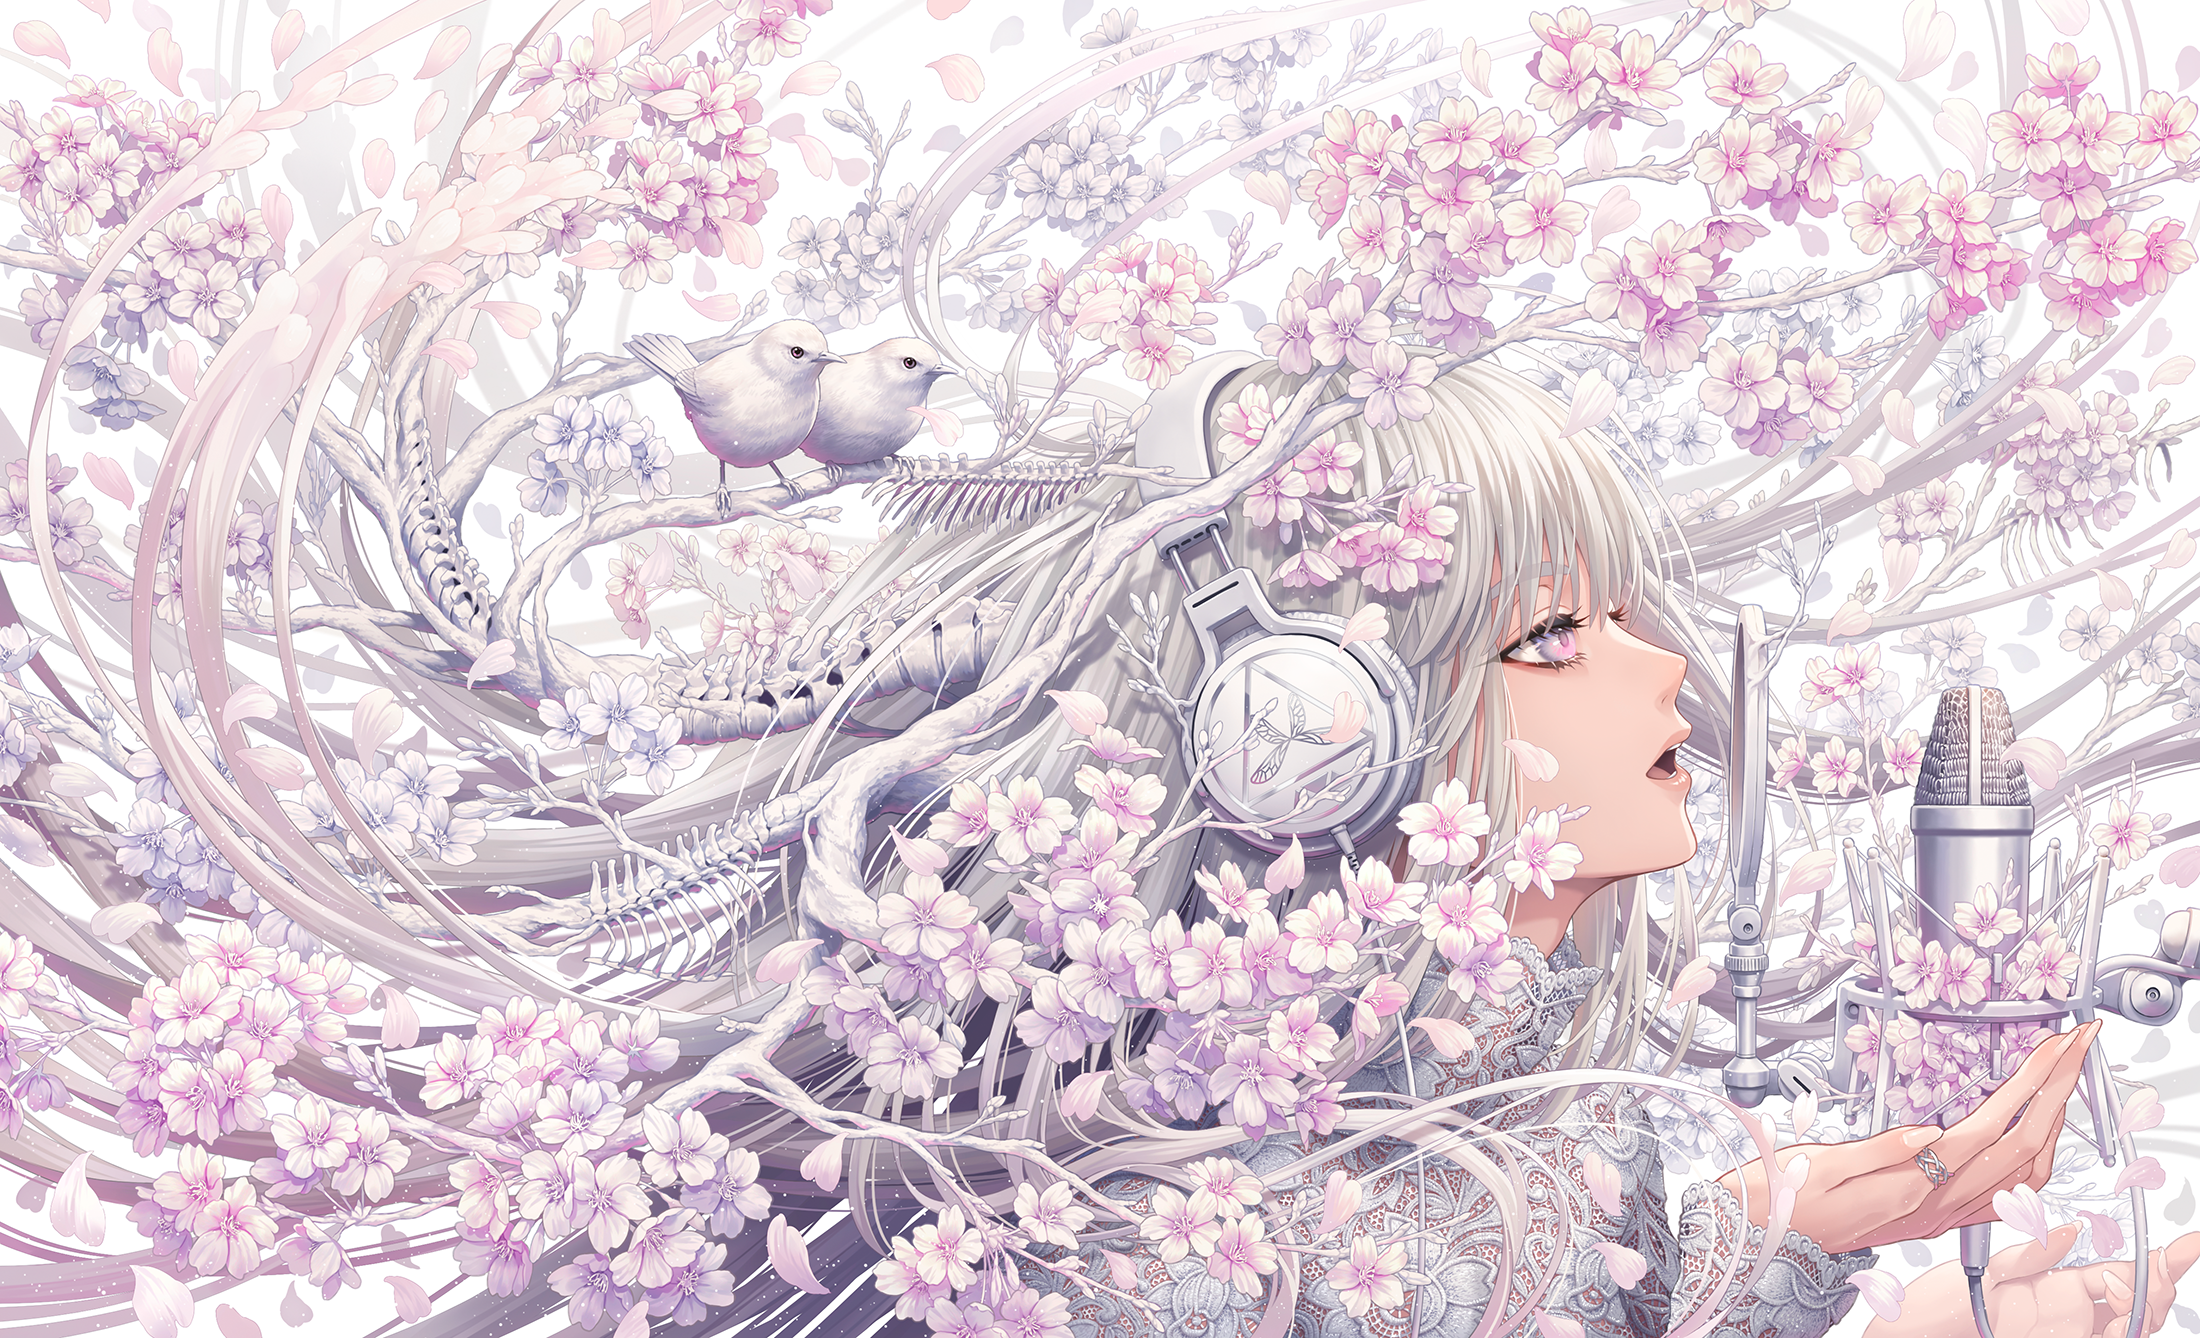 Anime Girl HD Wallpaper by ミナミ